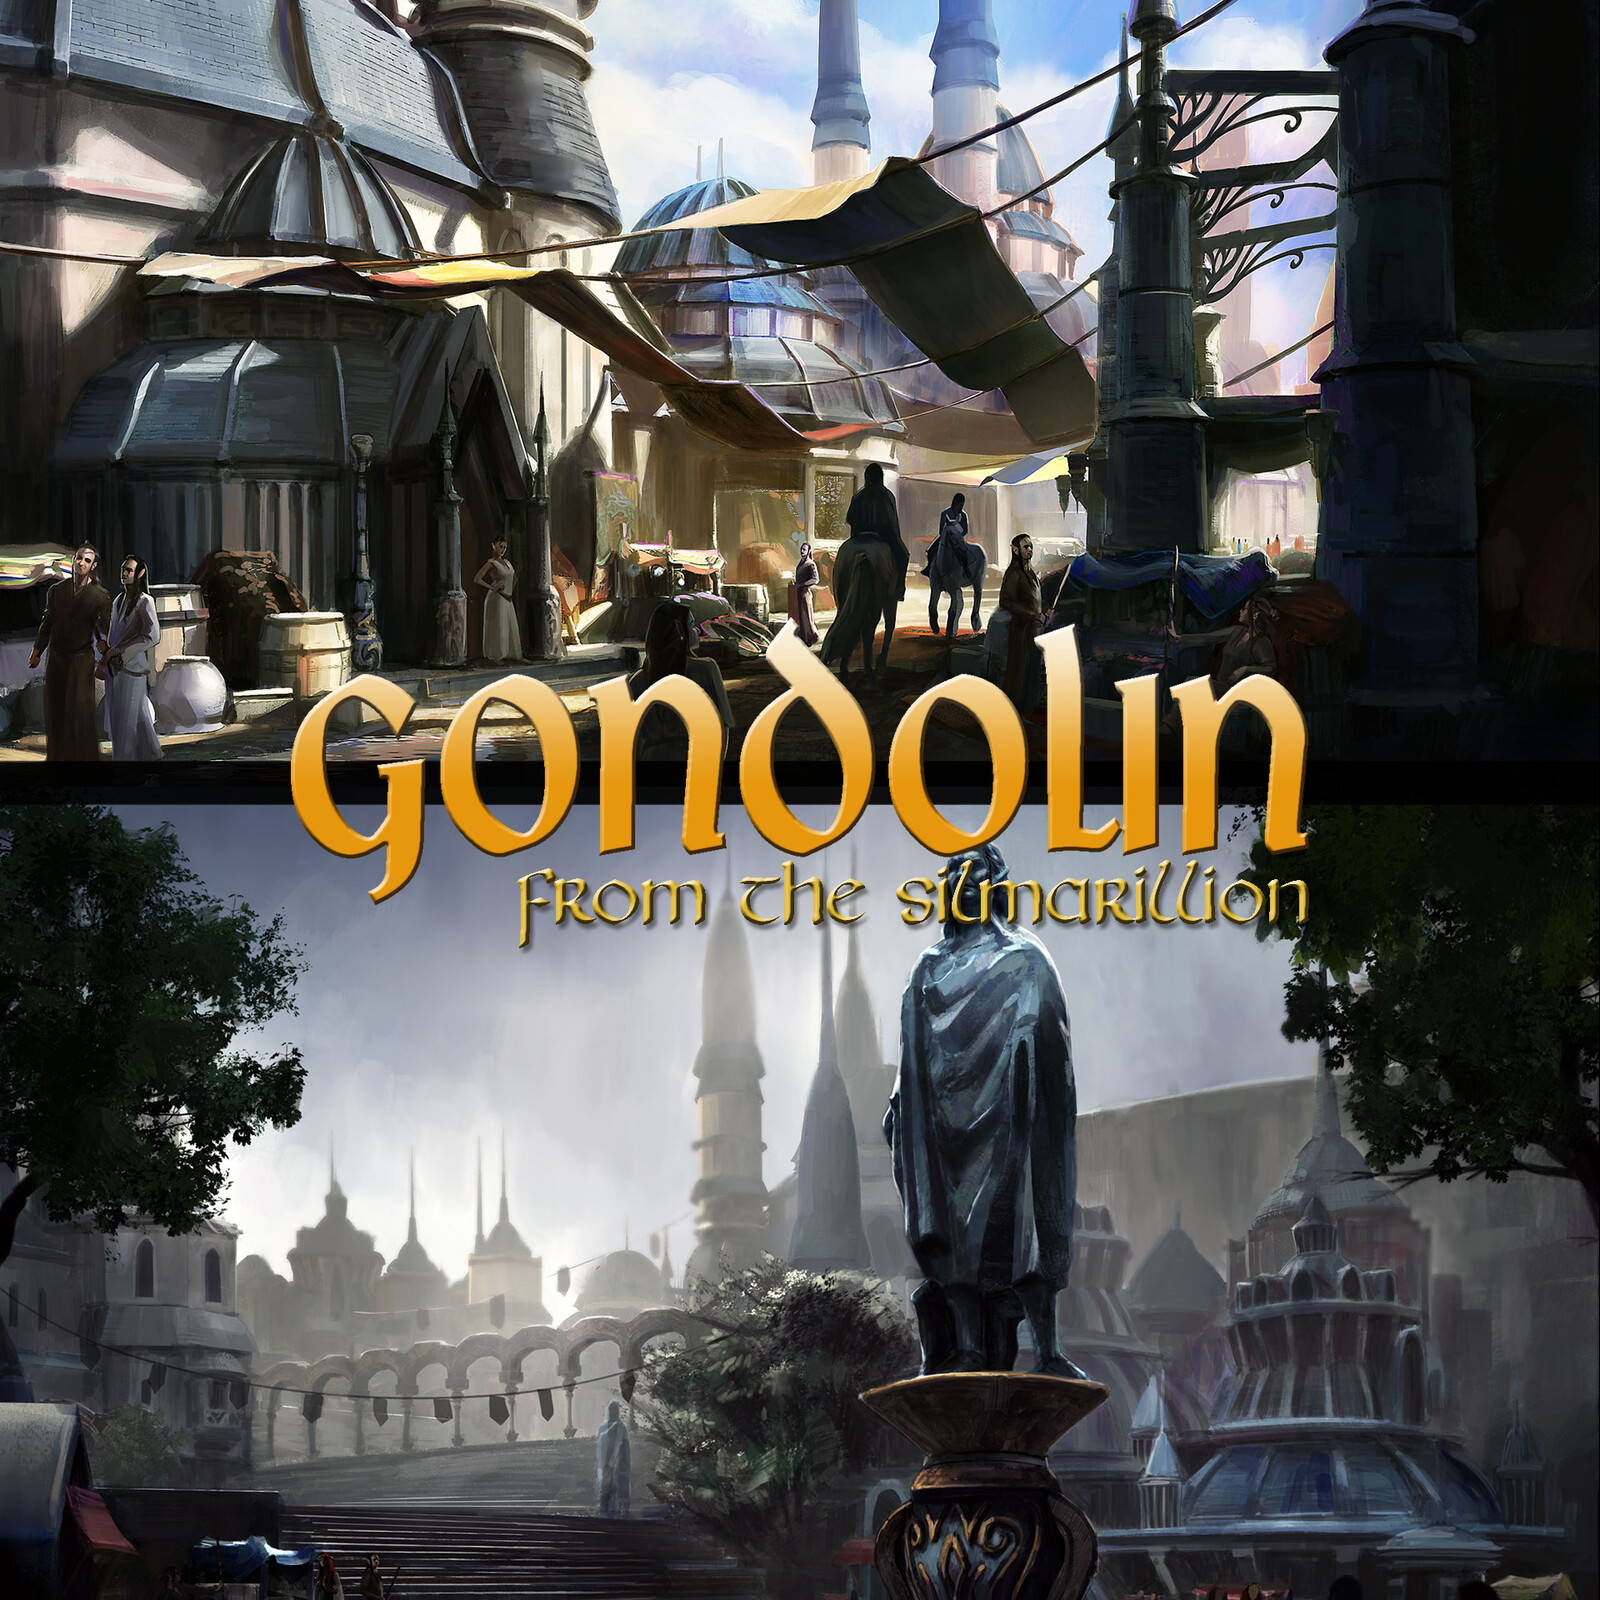 Gondolin's market - From the Silmarillion